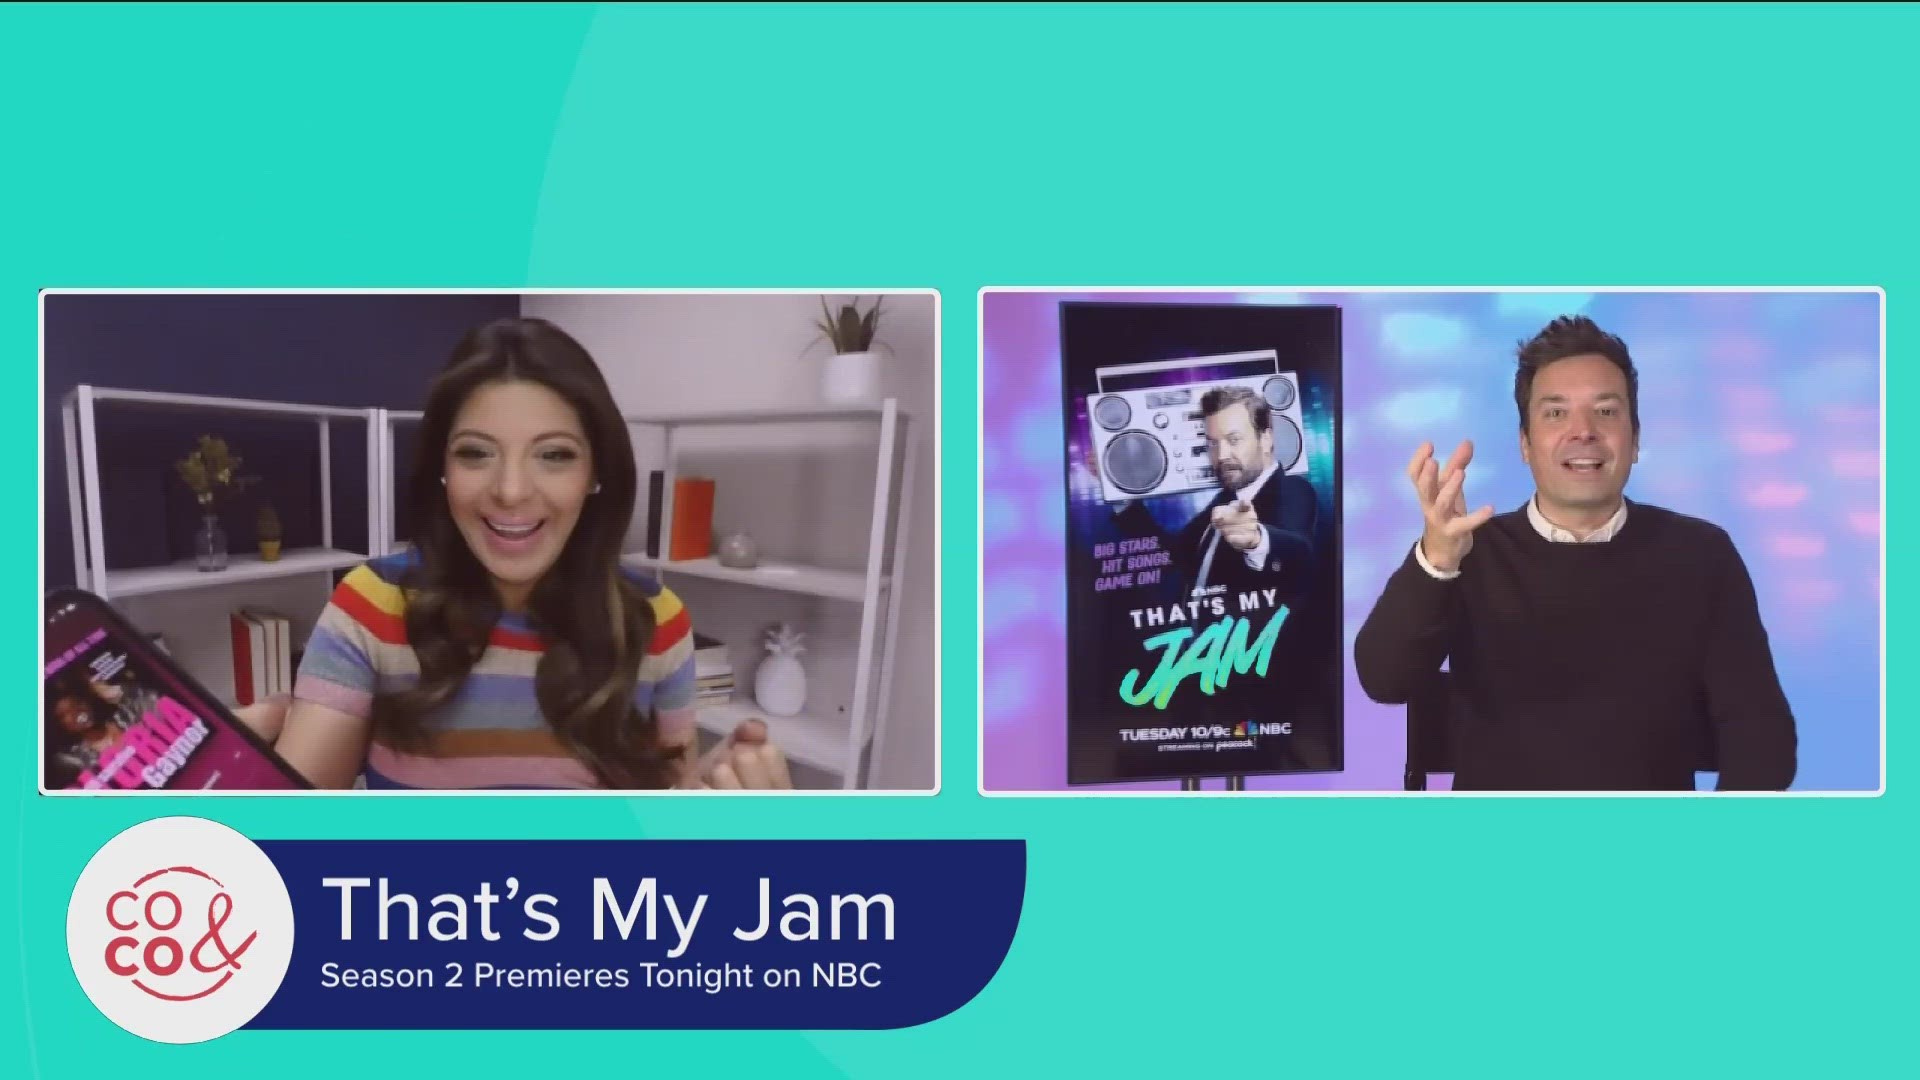 Season 2 of That's My Jam is on Tuesdays on NBC.